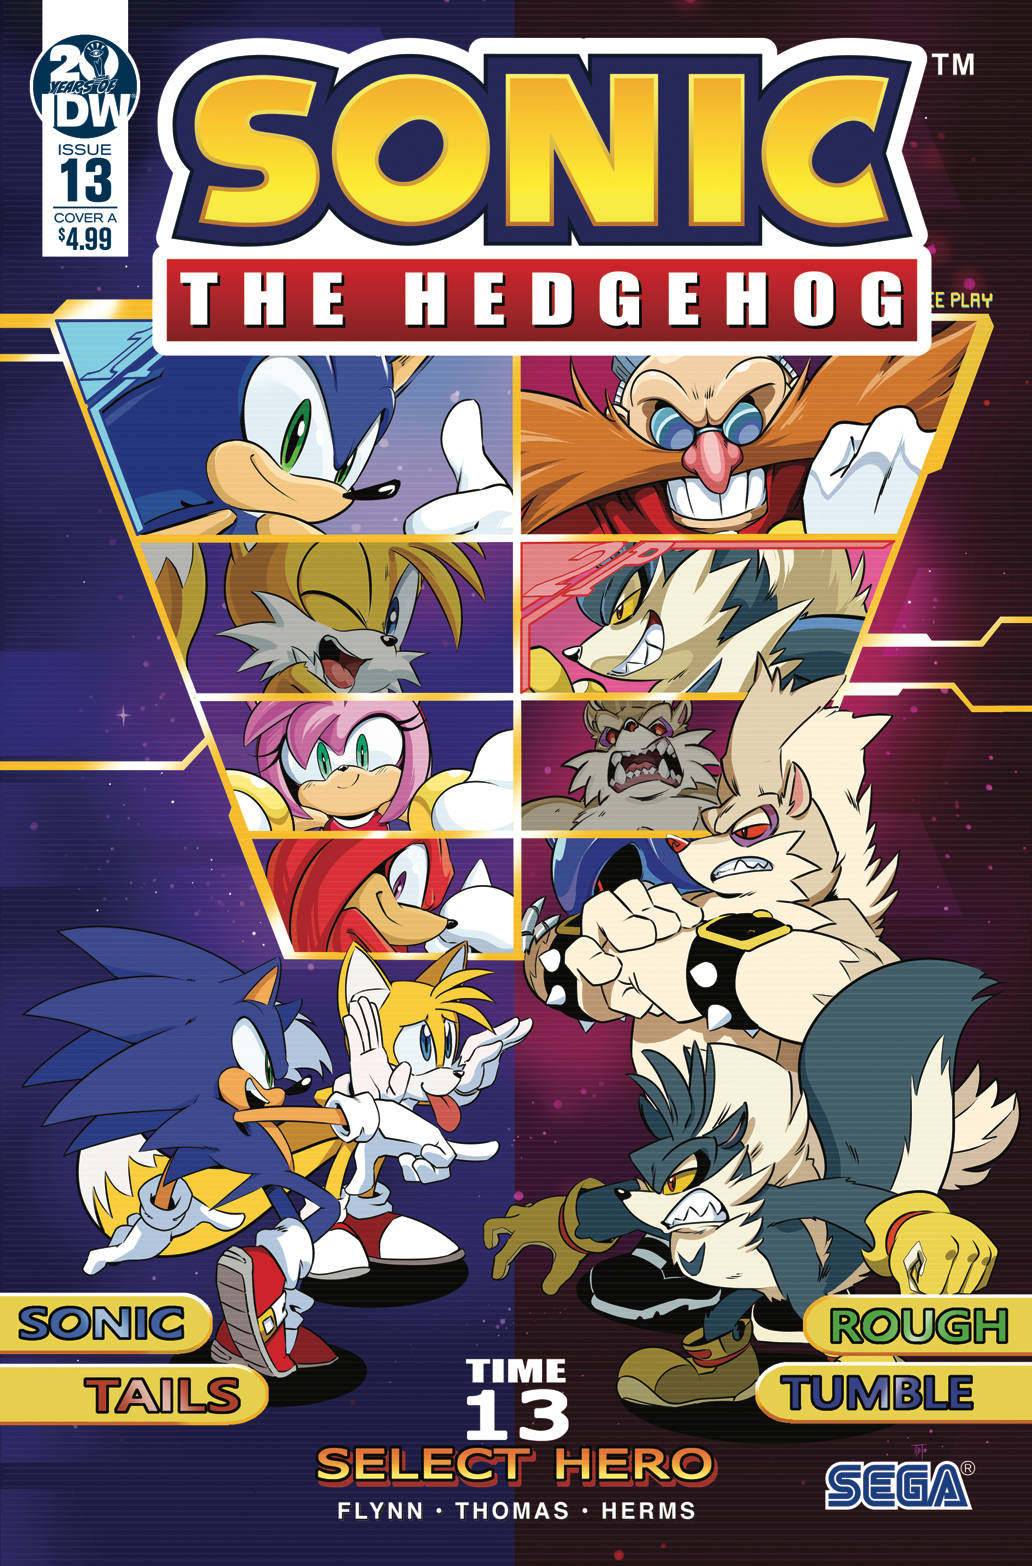 Sonic the Hedgehog #13 Cover A Thomas